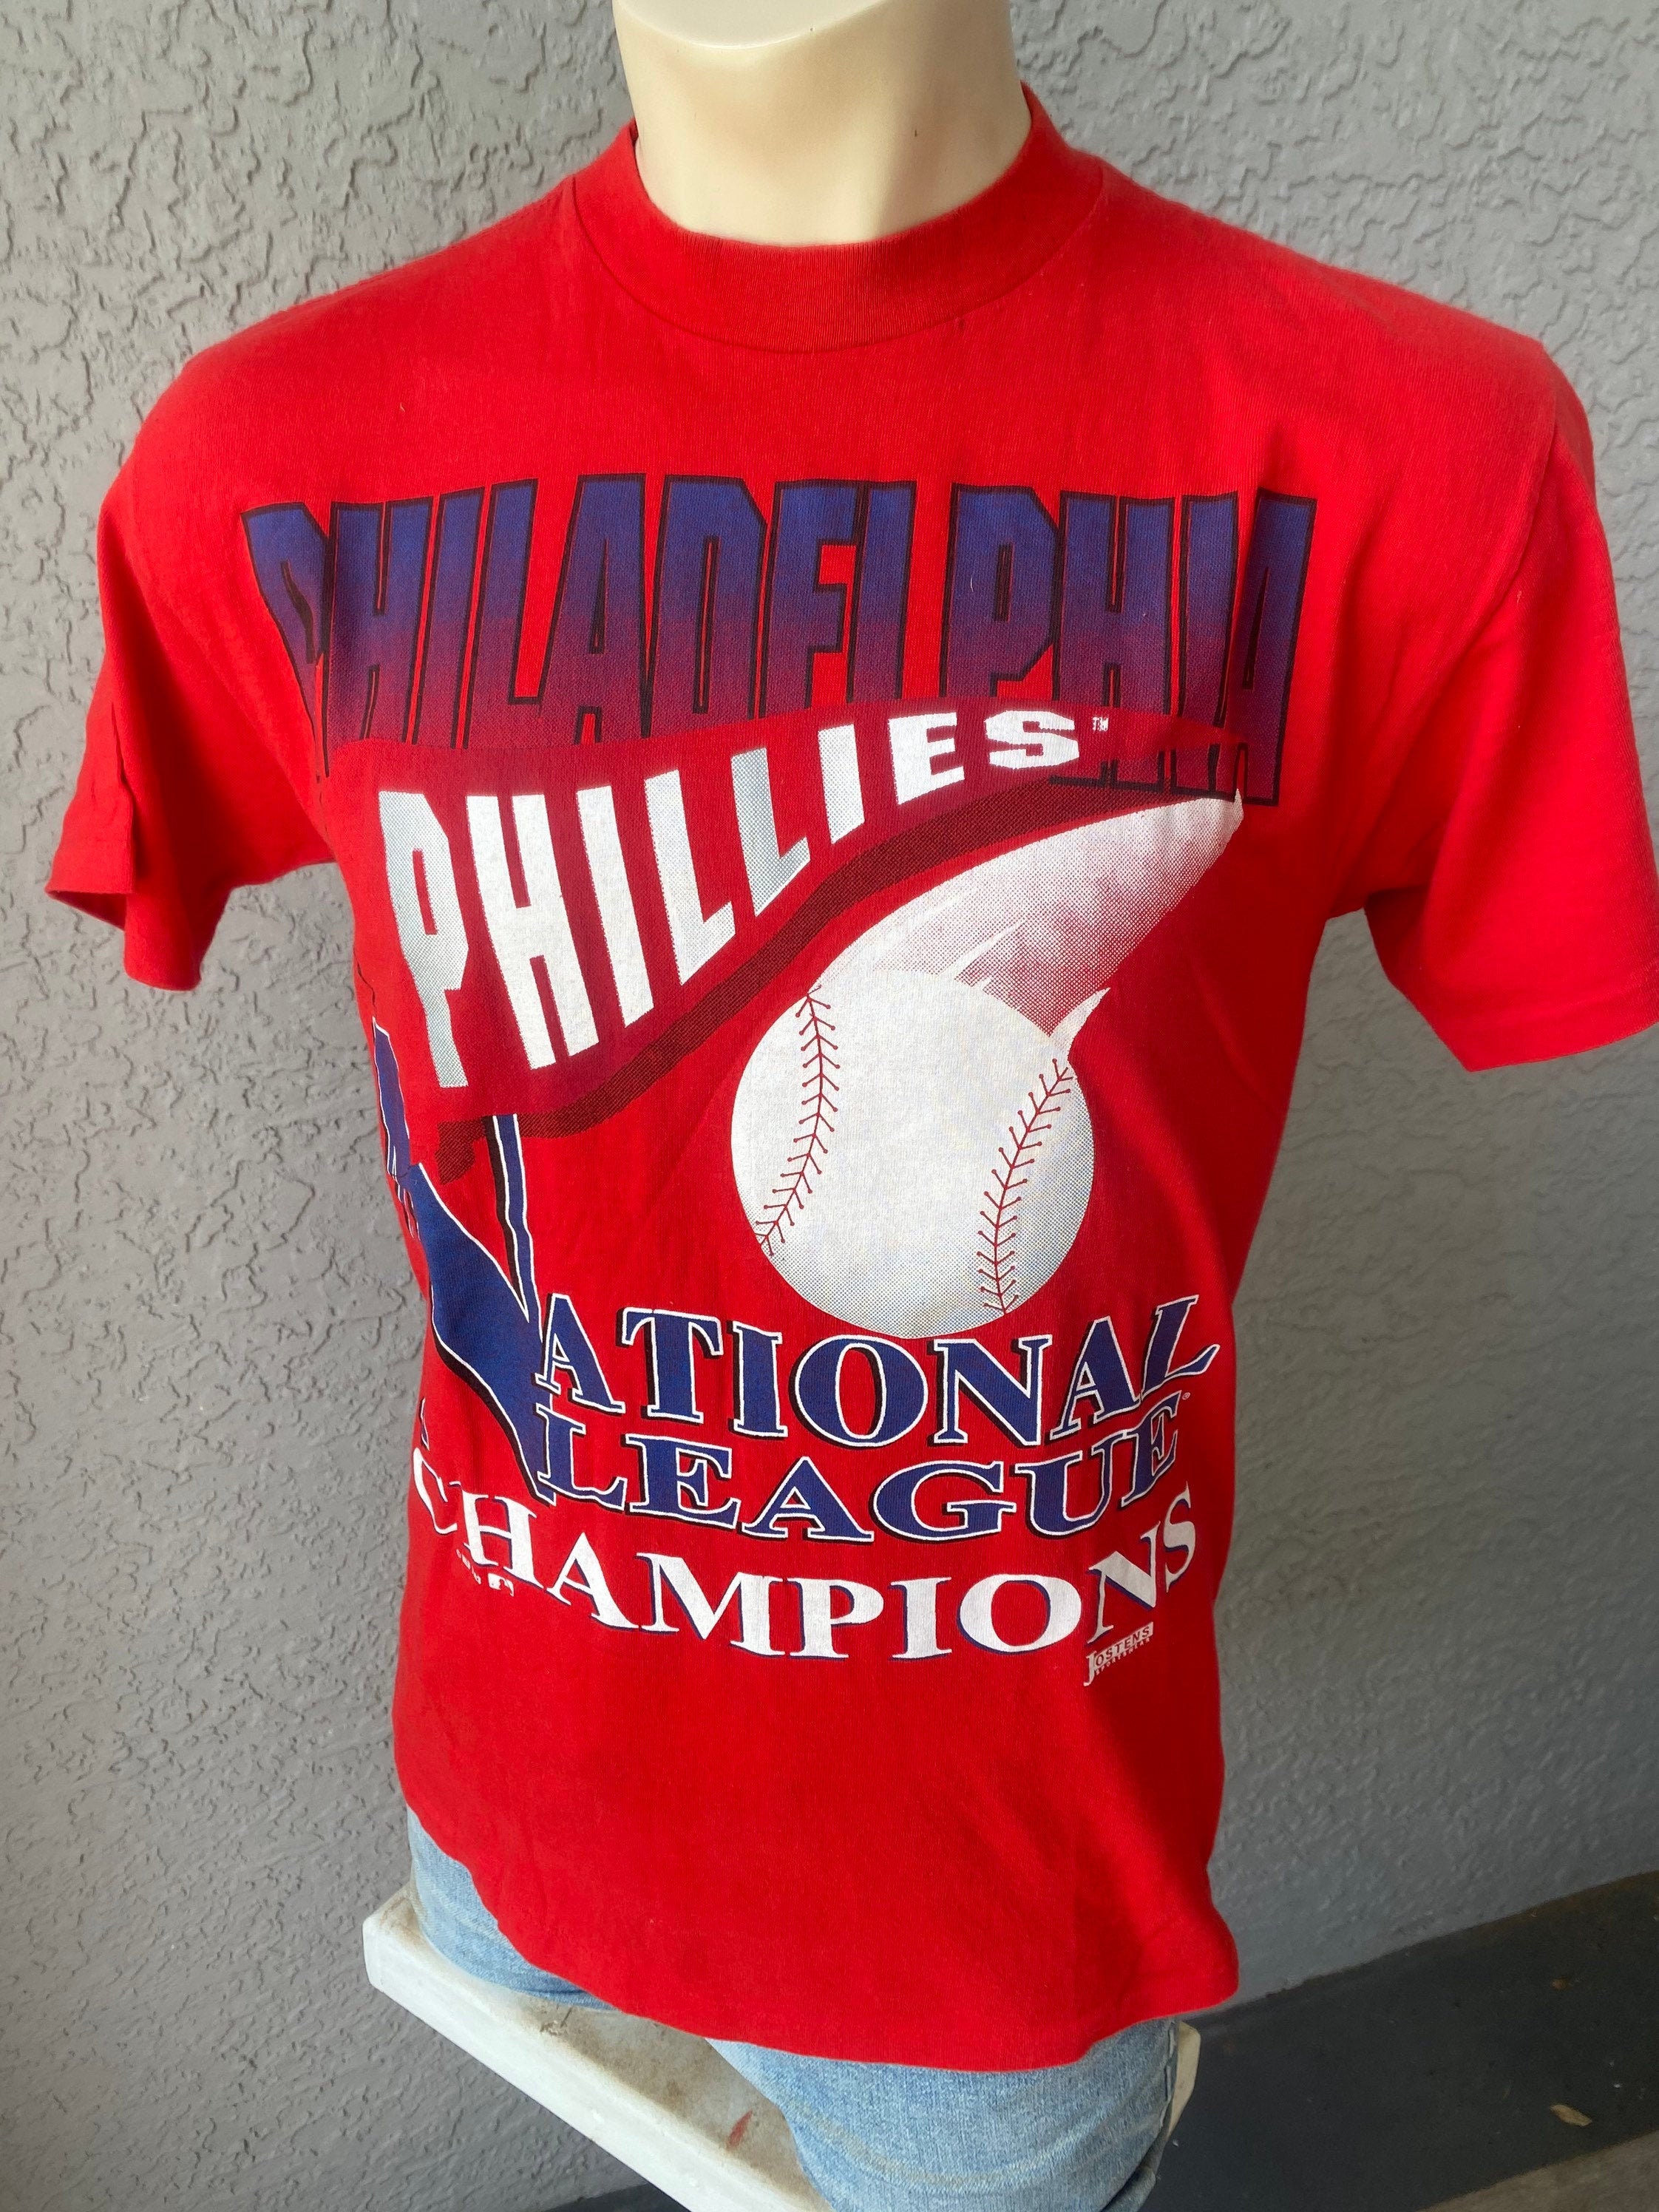 Philadelphia Phillies Stitched Baseball 3/4 Red Sleeve Raglan Unisex L